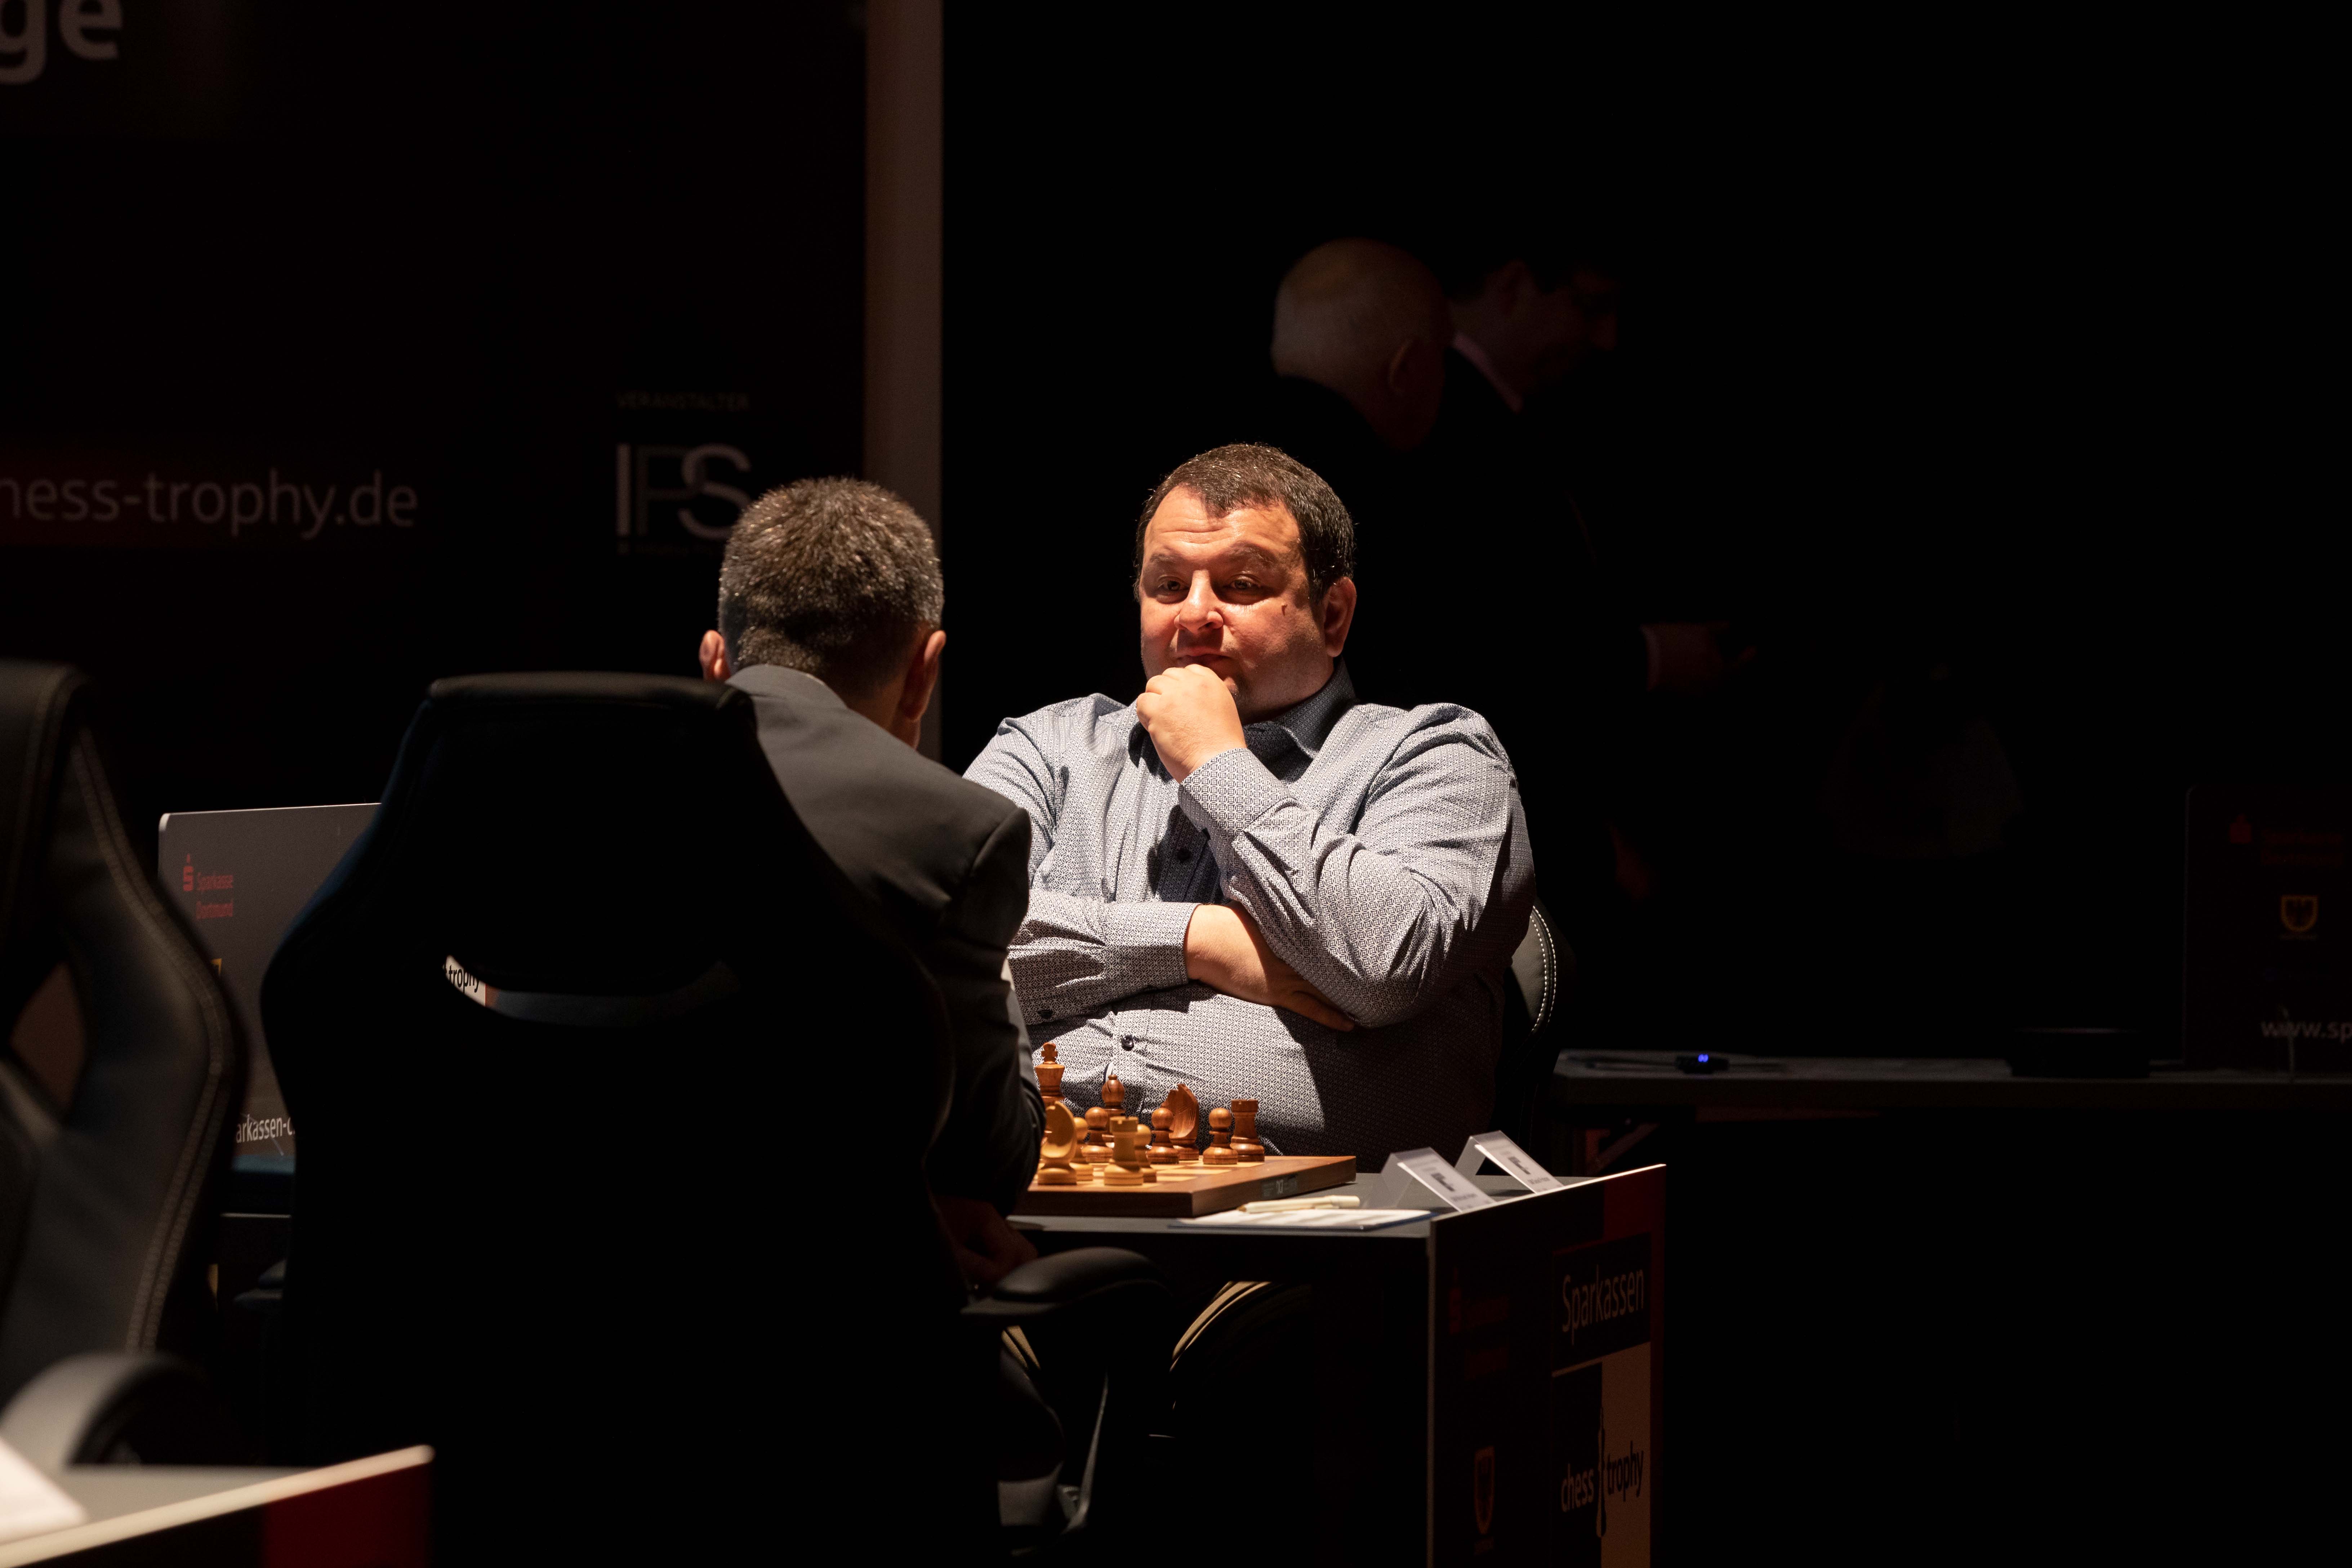 Local hero Daniel Fridman back at the International Dortmund Chess Days